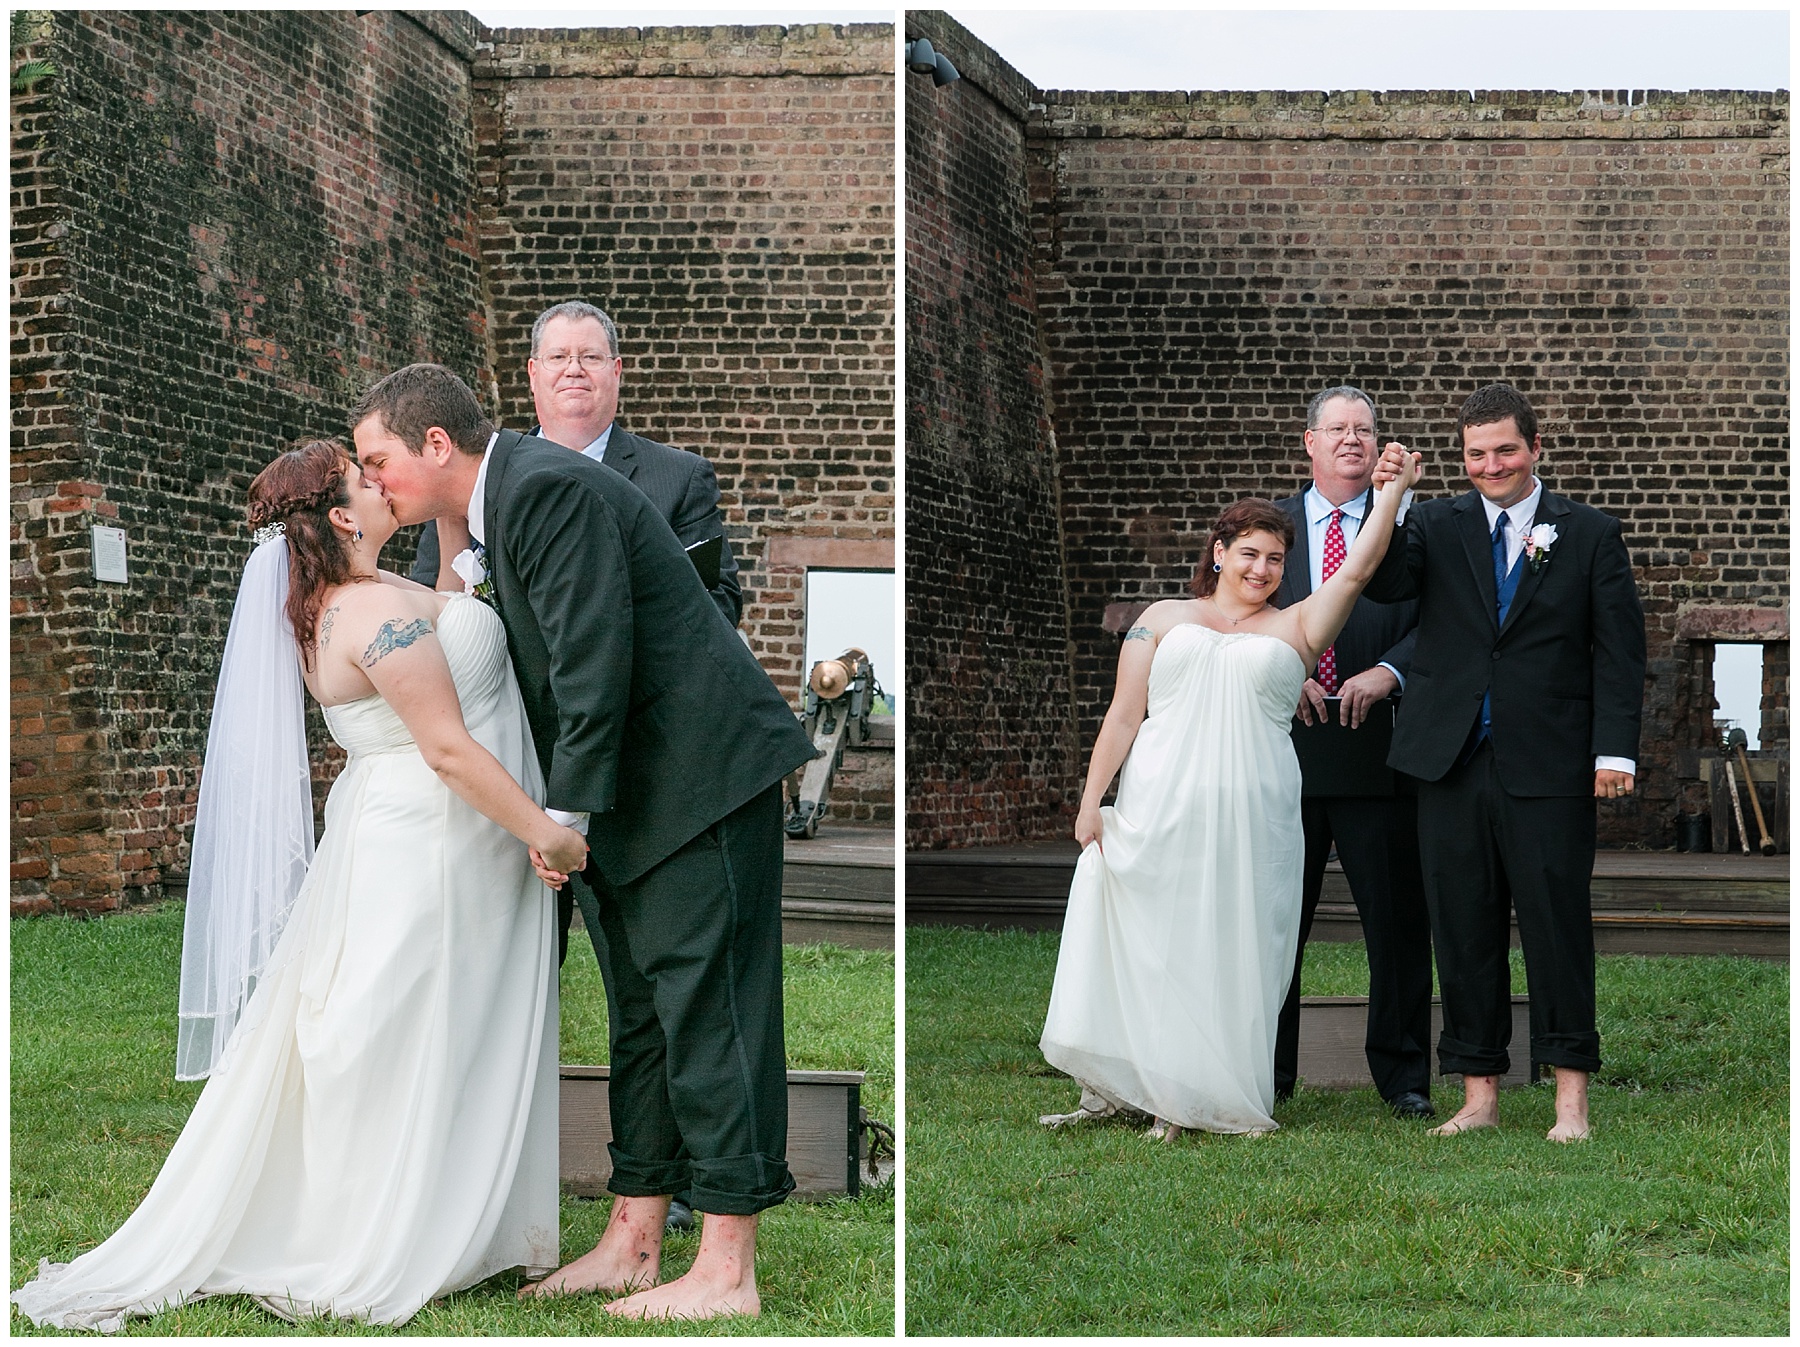 Savannah wedding, old fort jackson, historic wedding, stormy wedding, navy and coral wedding, wedding photographer